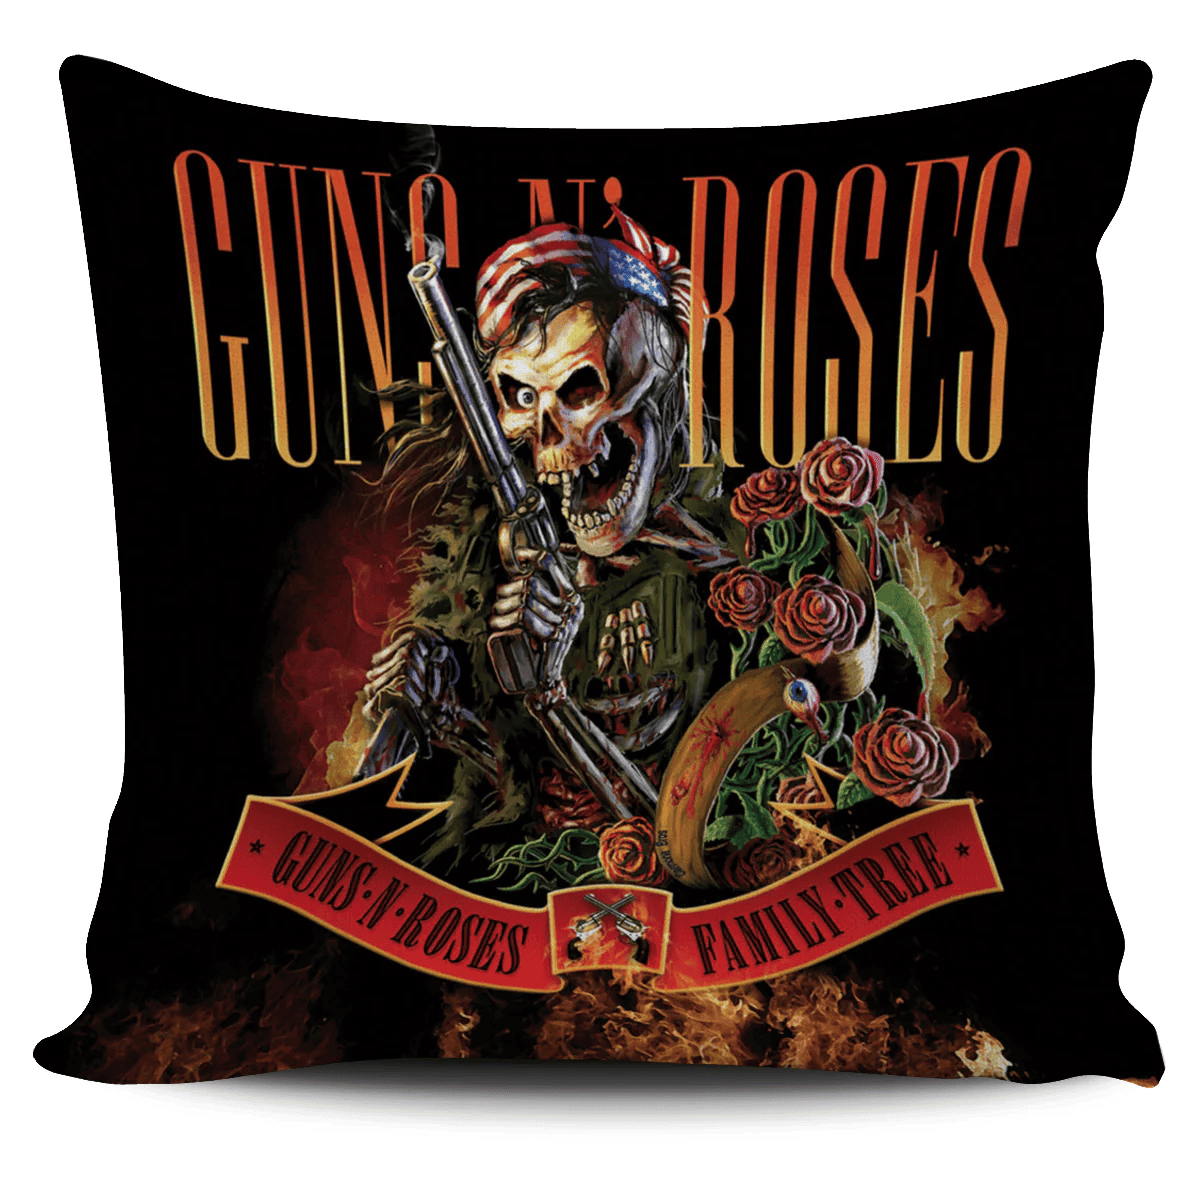 Guns N' Roses Pillow cover 03 H